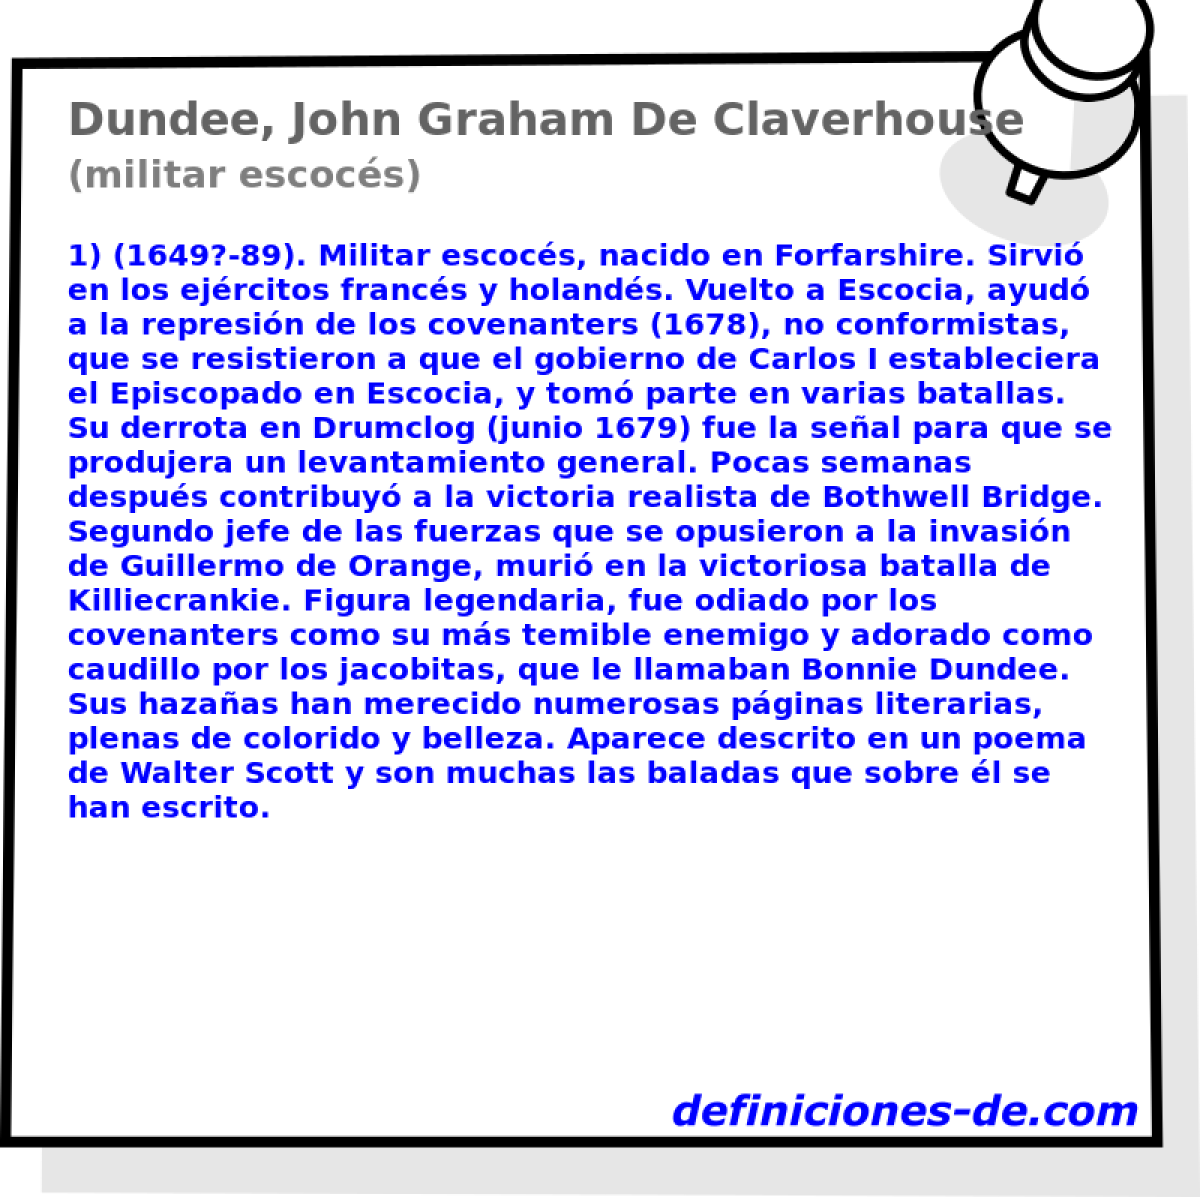 Dundee, John Graham De Claverhouse (militar escocs)